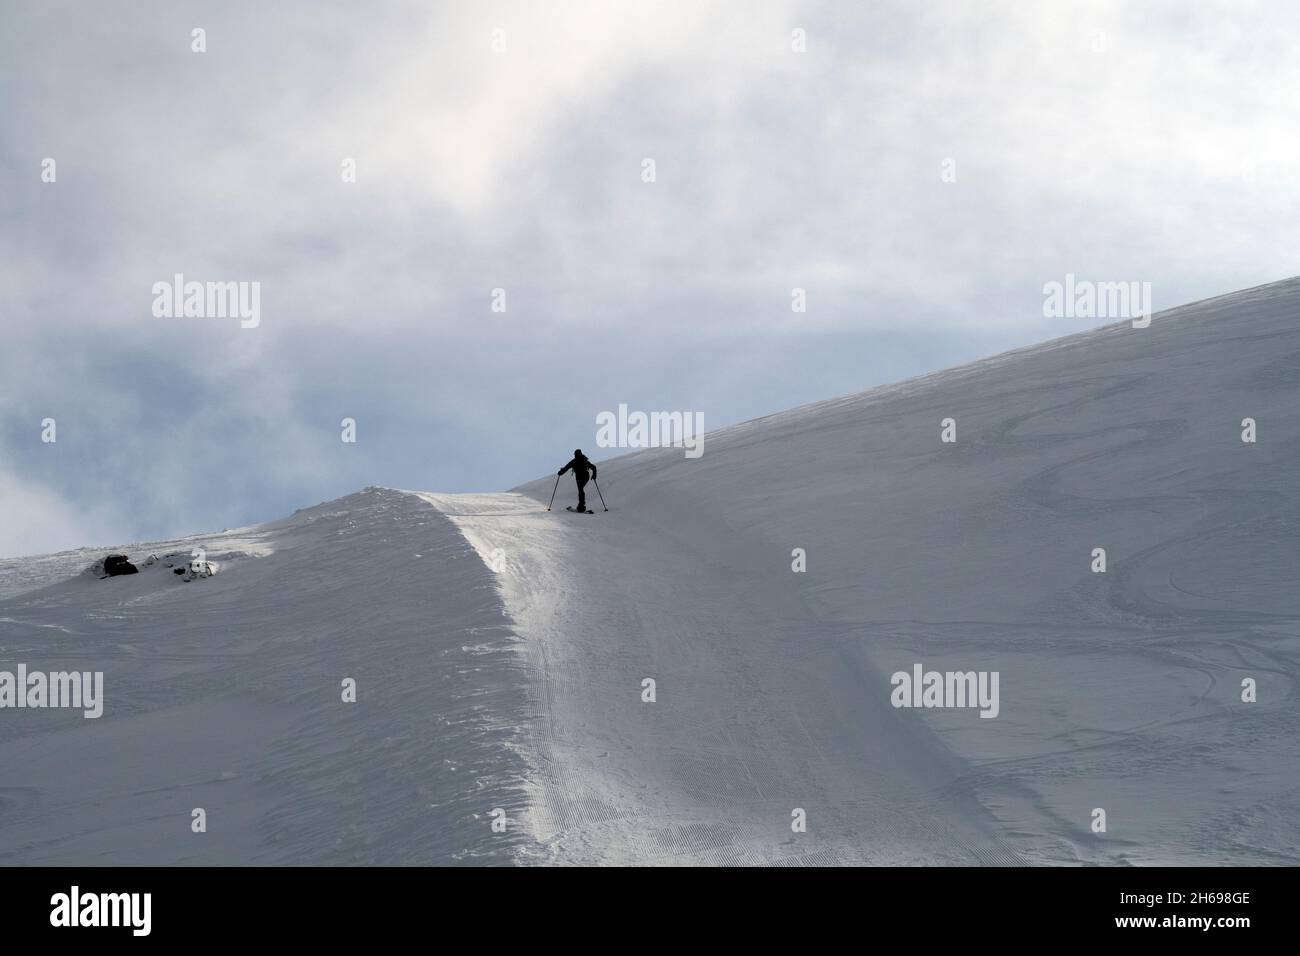 Uphill skier on sunny day Stock Photo